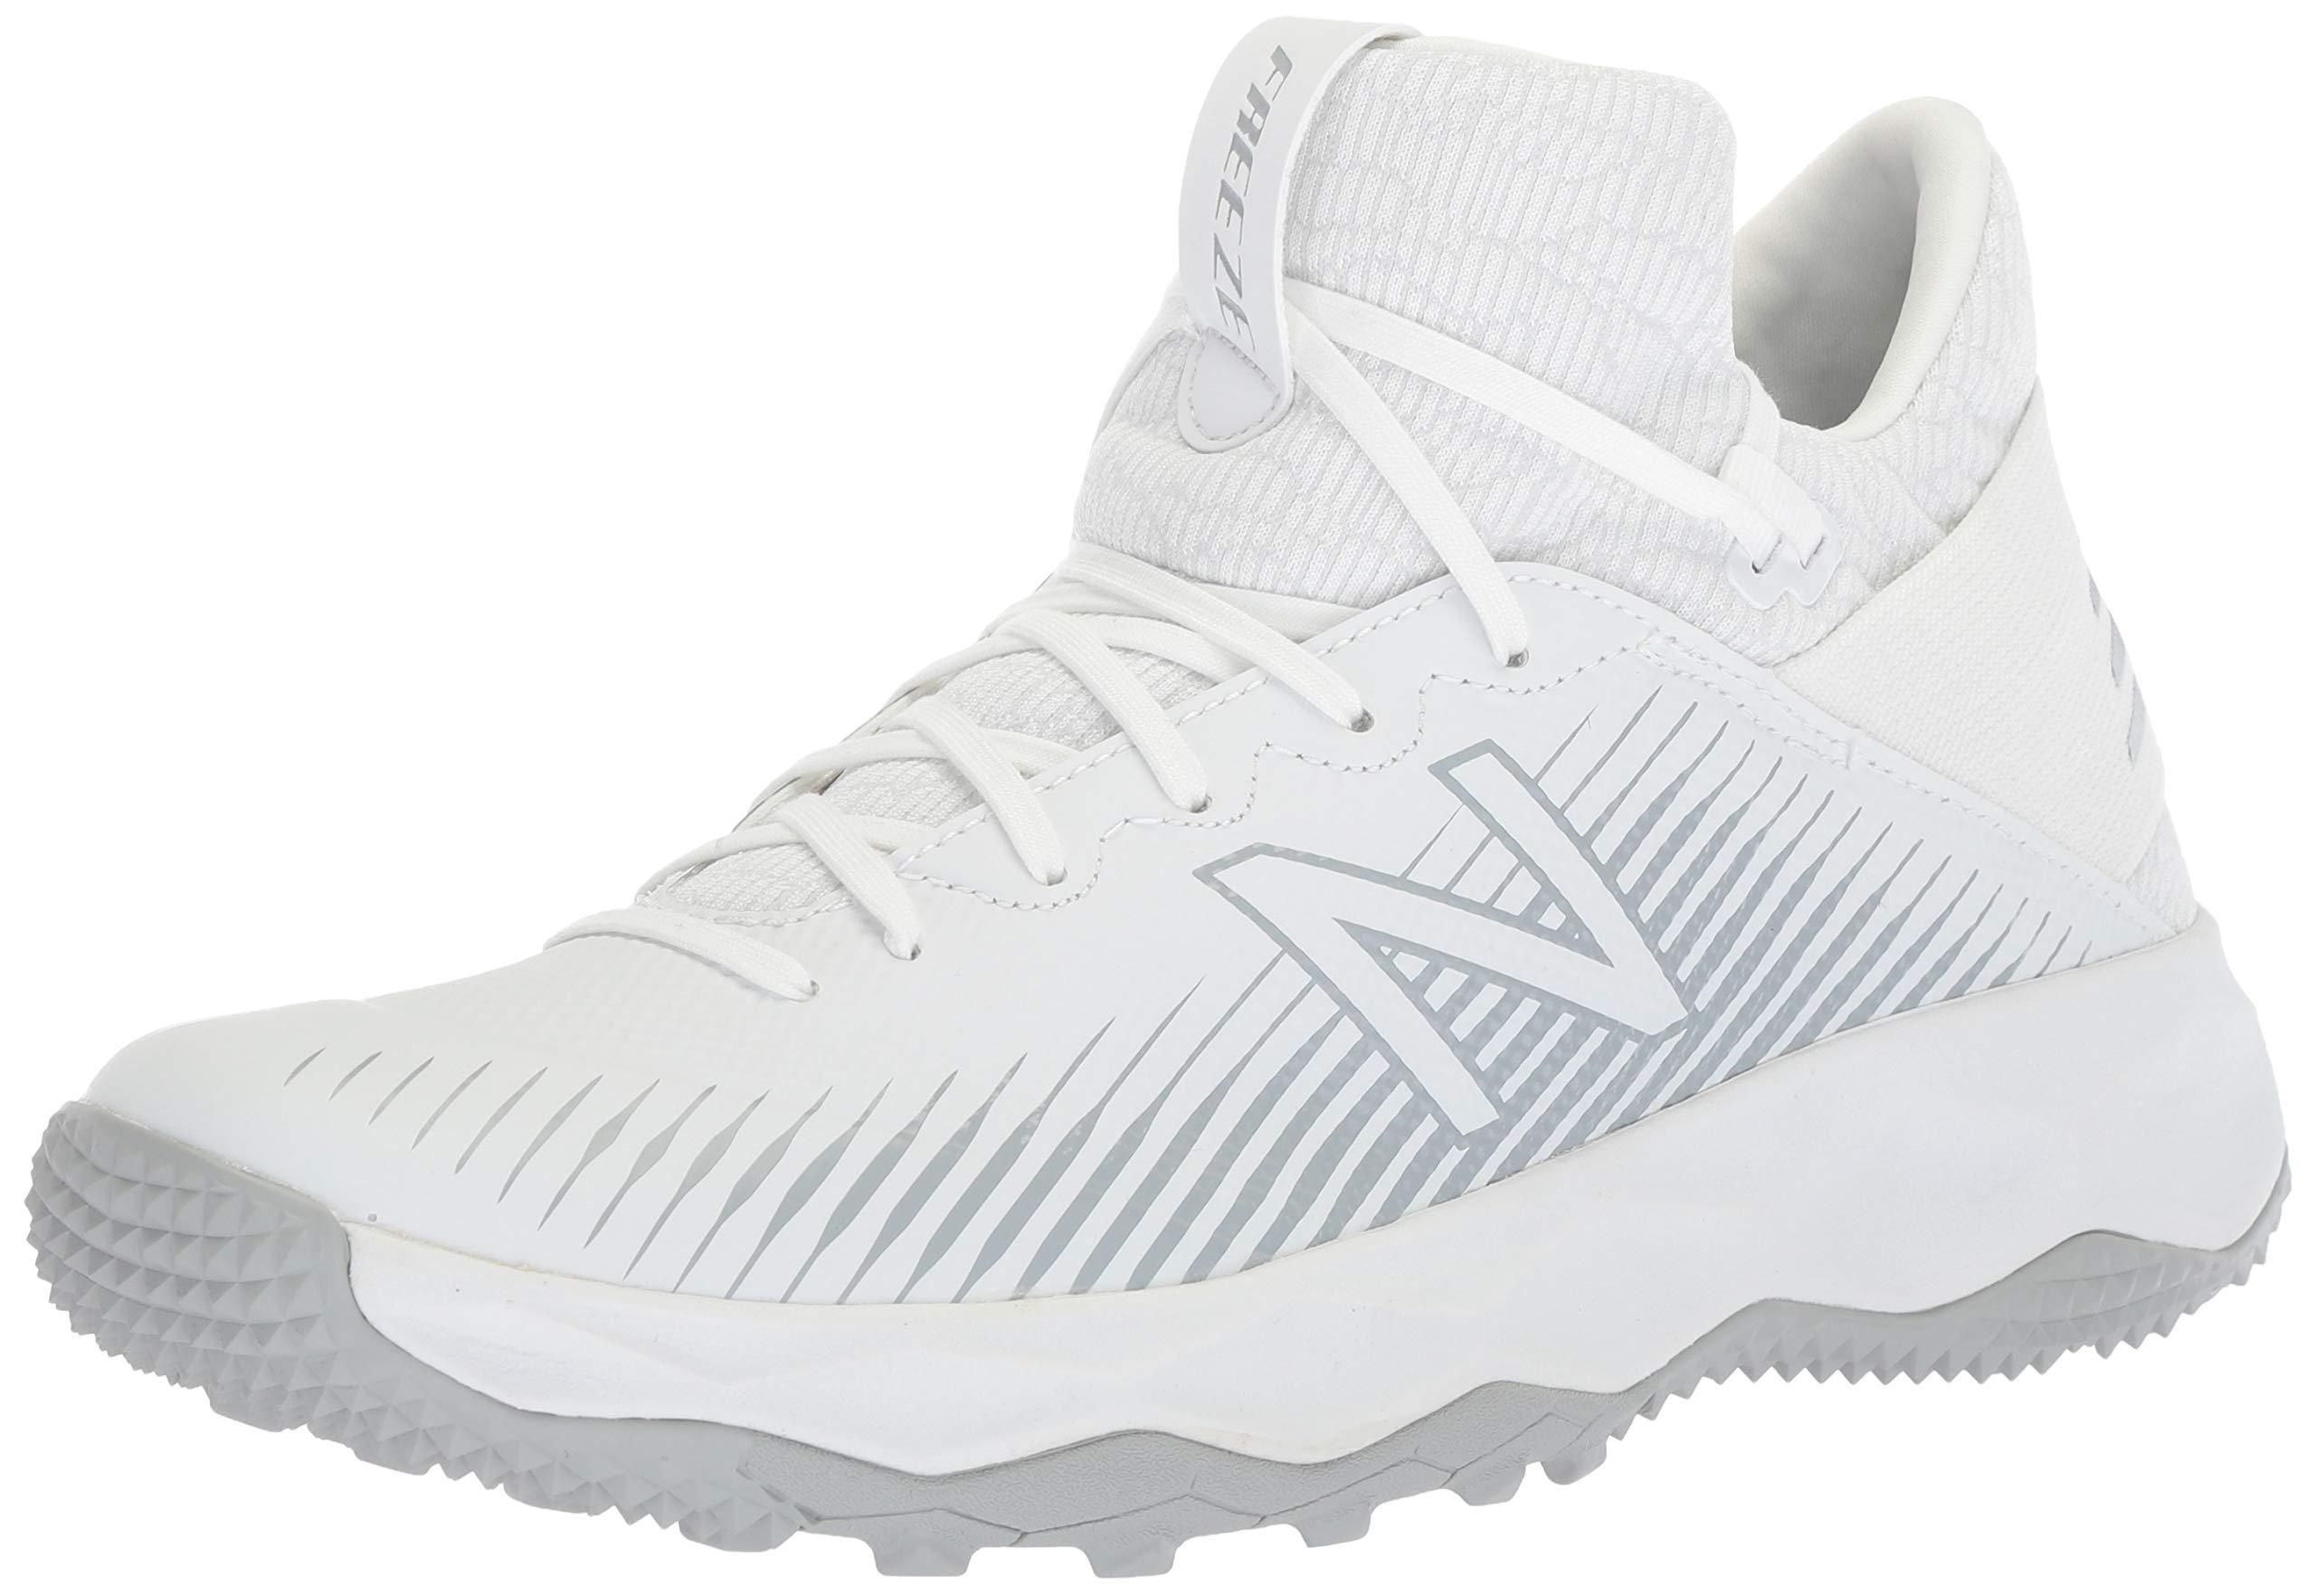 New Balance Rubber Freezelx 2.0 Turf Lacrosse Shoe in White/Silver  (Metallic) for Men | Lyst